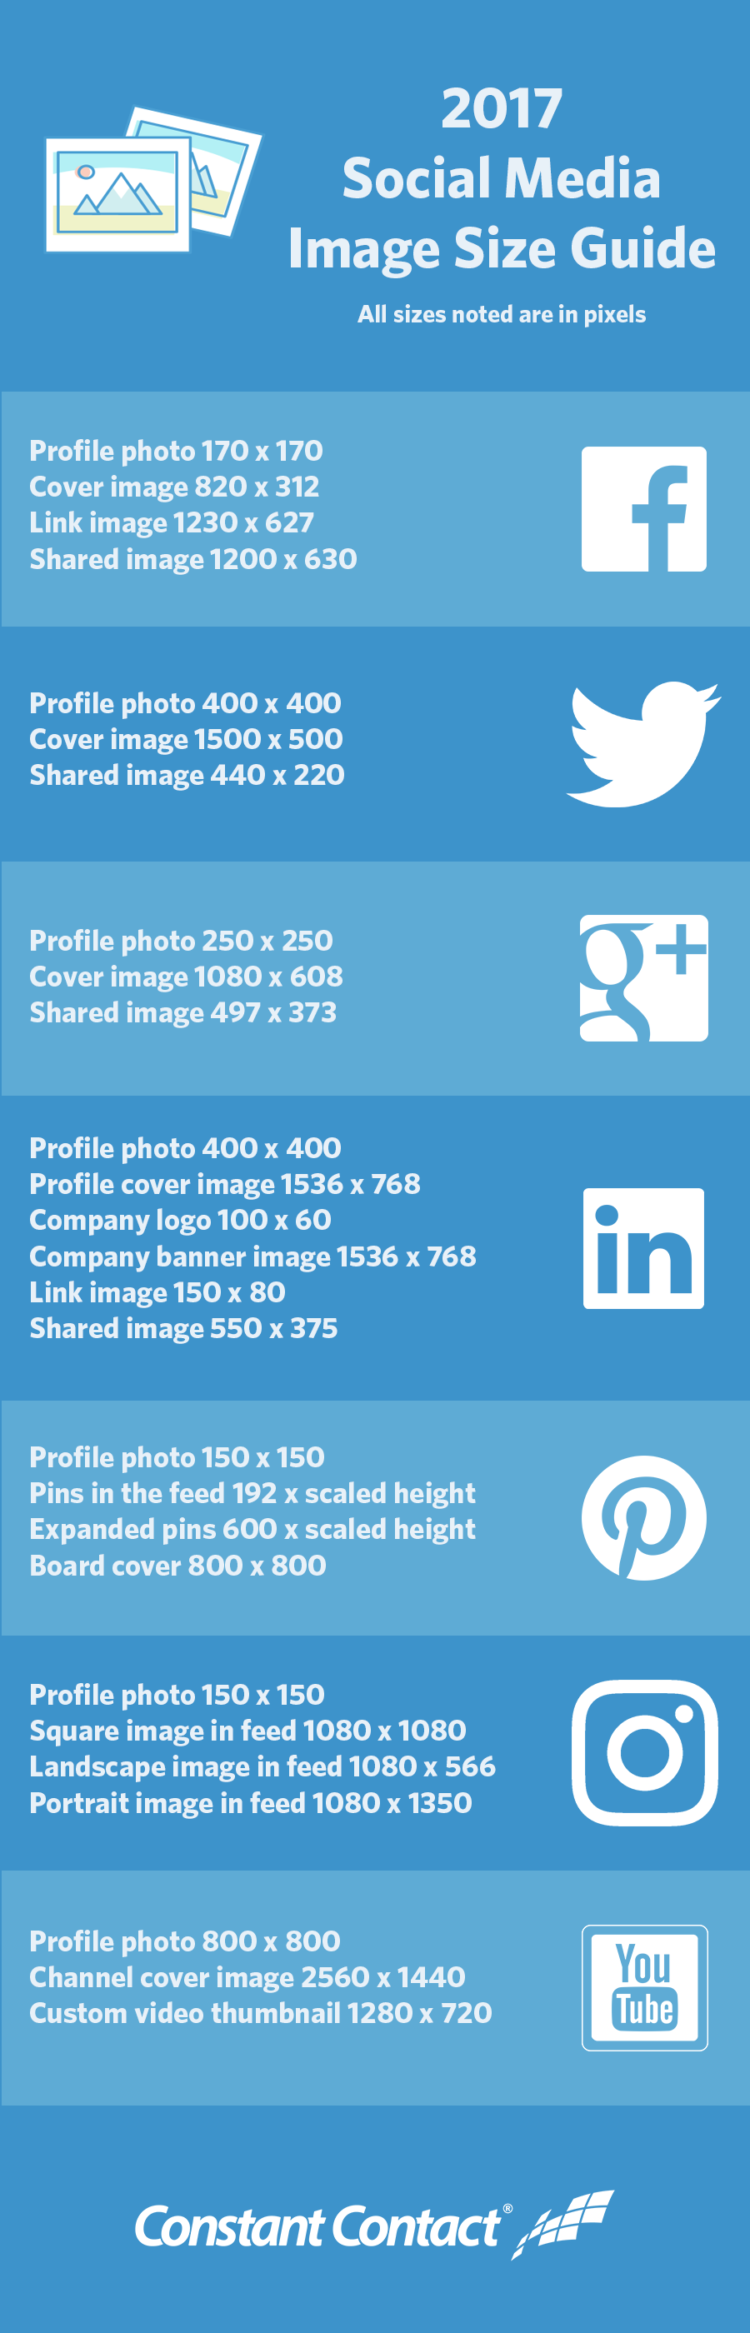 social-media-image-sizes-guide-2017